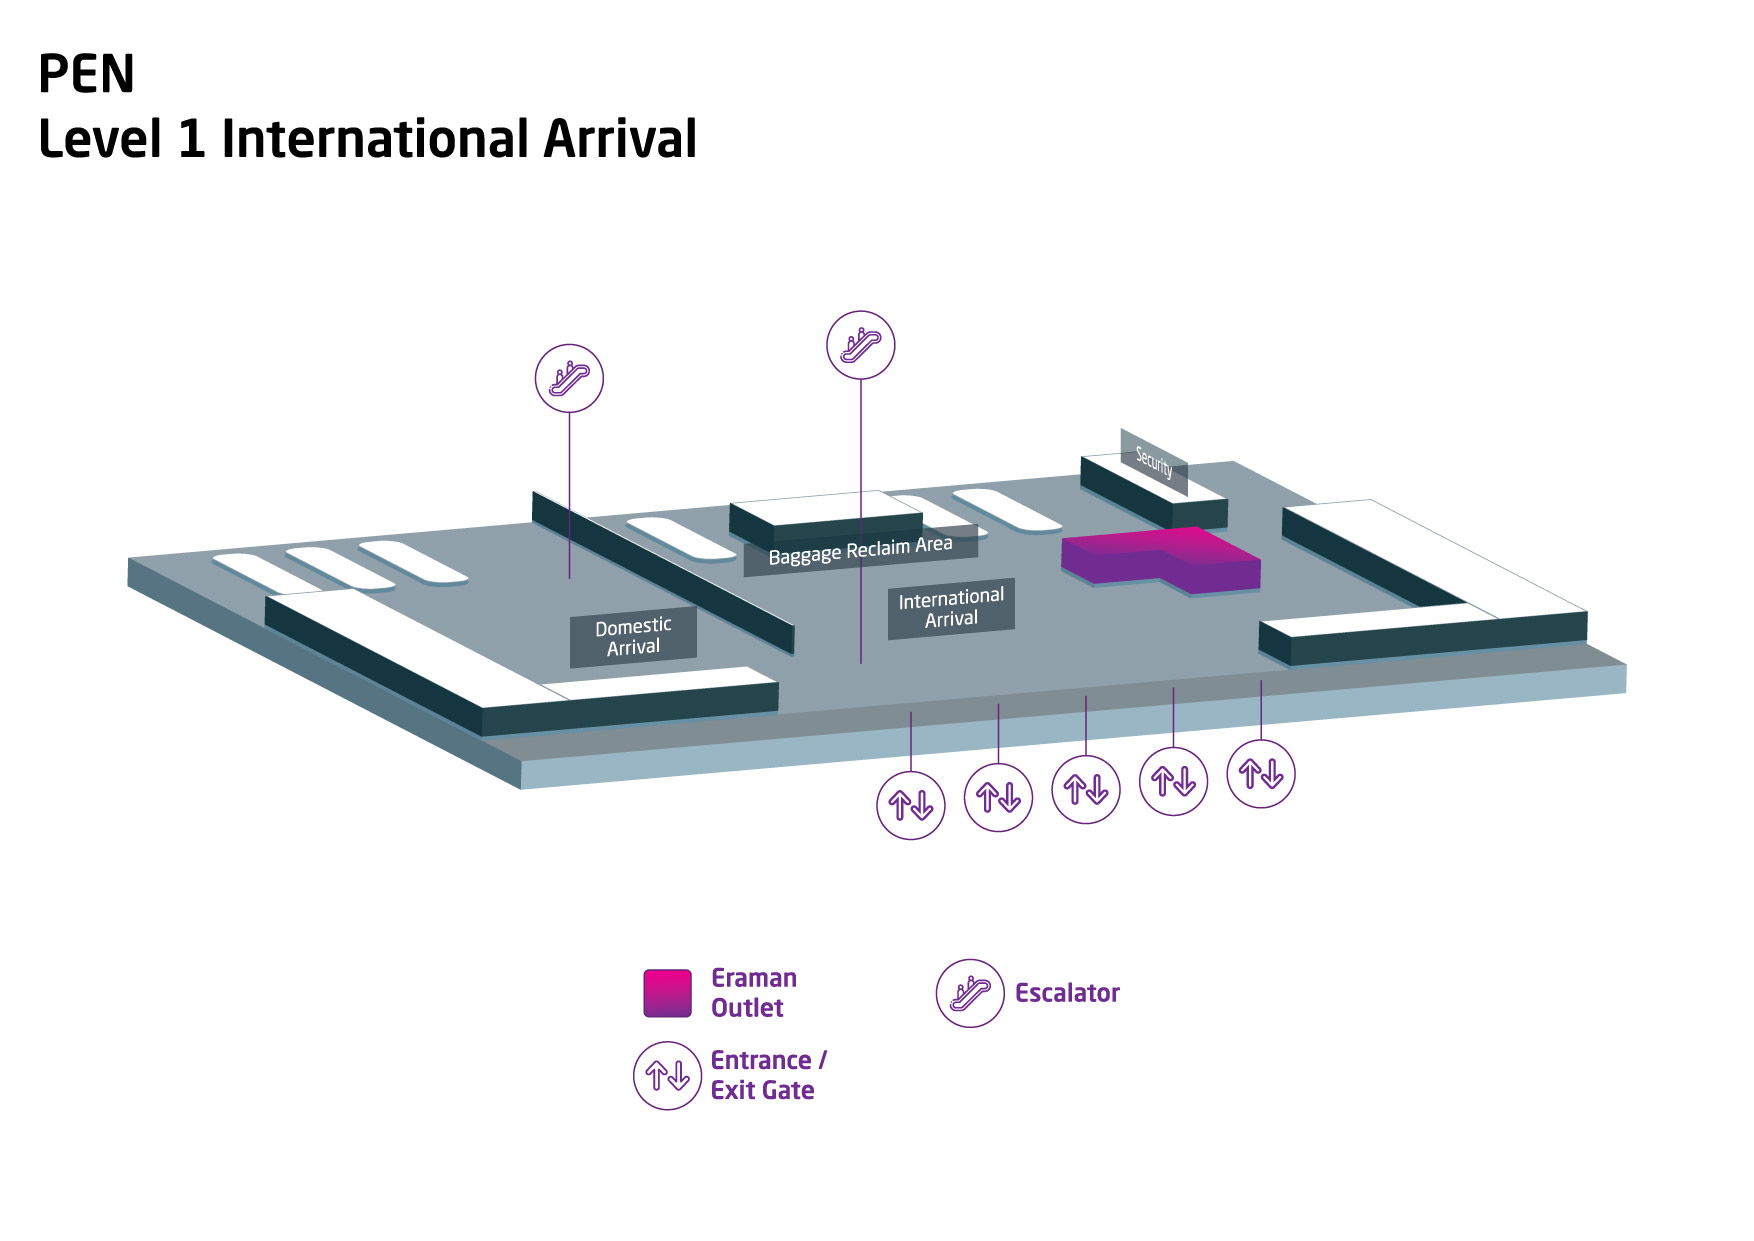 Penang International Airport Level 1 International Arrival